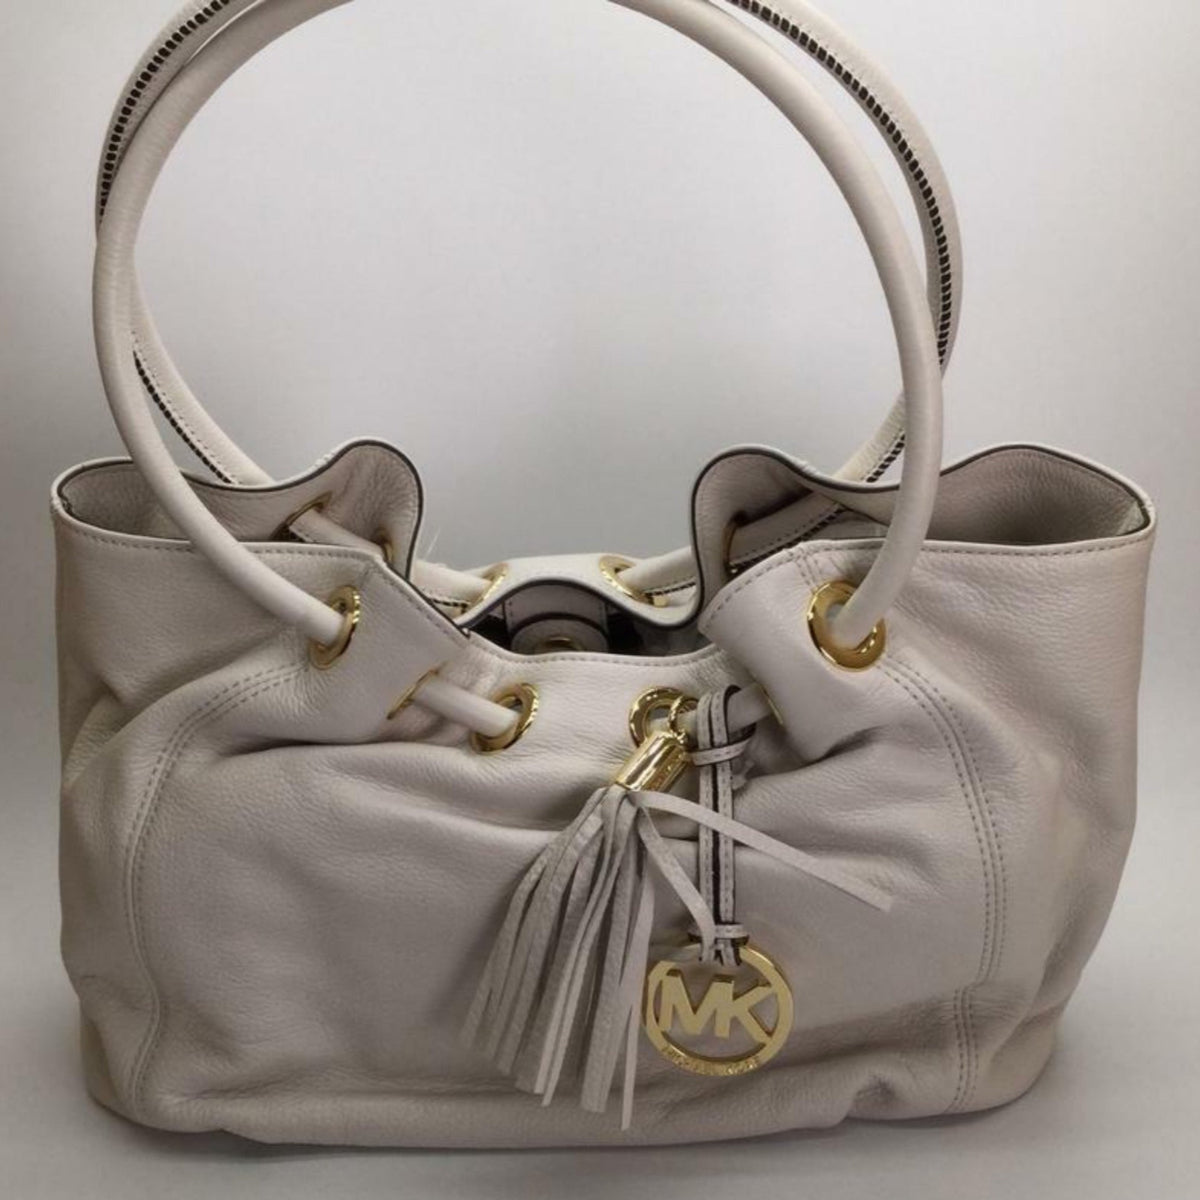 Michael Kors bag On Sale - Authenticated Resale